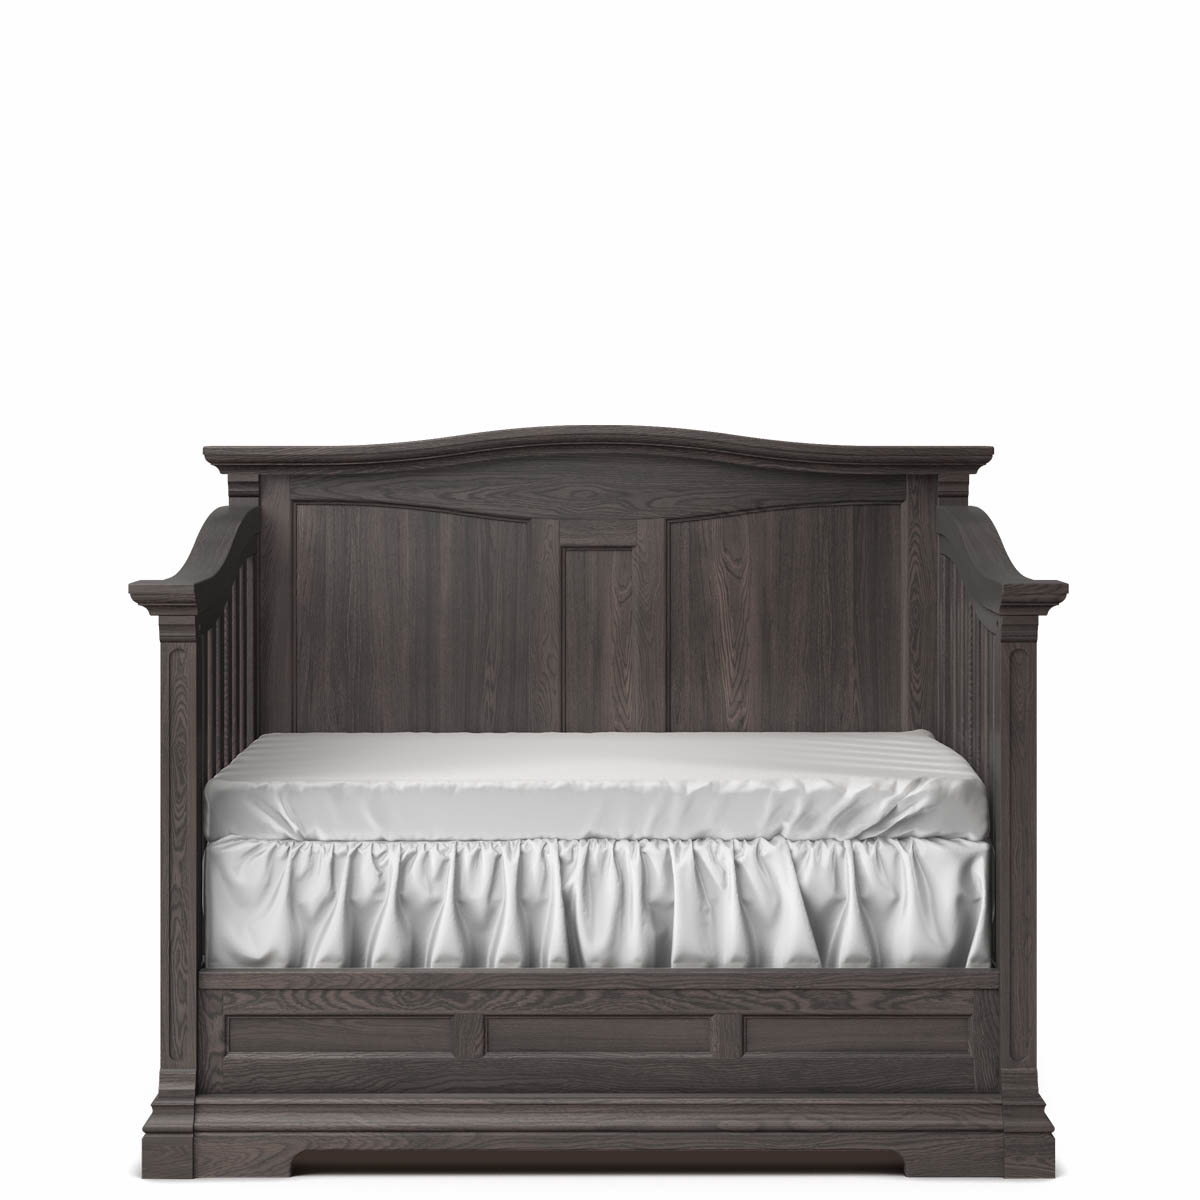 Romina Furniture Imperio Solid Panel Convertible Crib